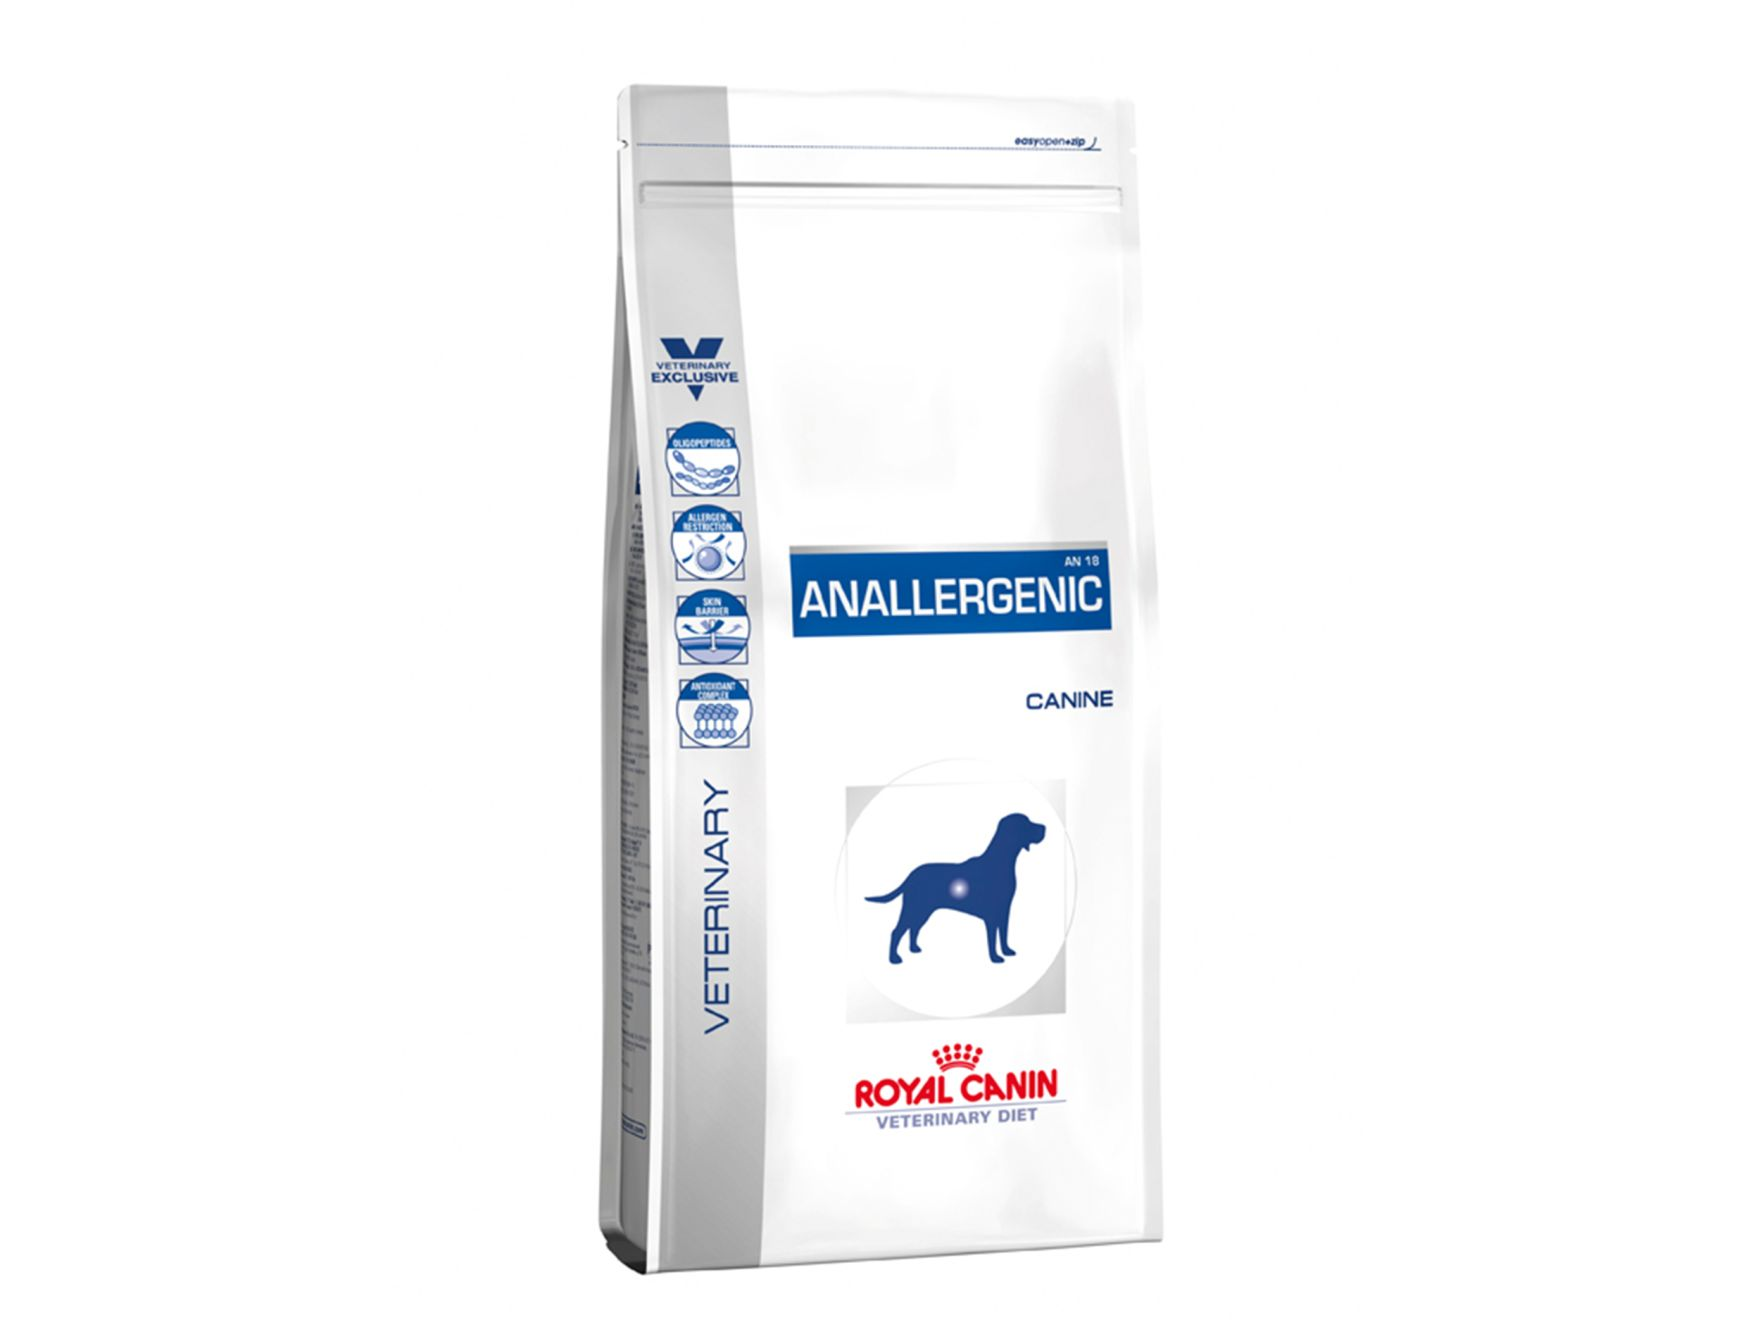  Packshot de produits Royal Canin Anallergenic